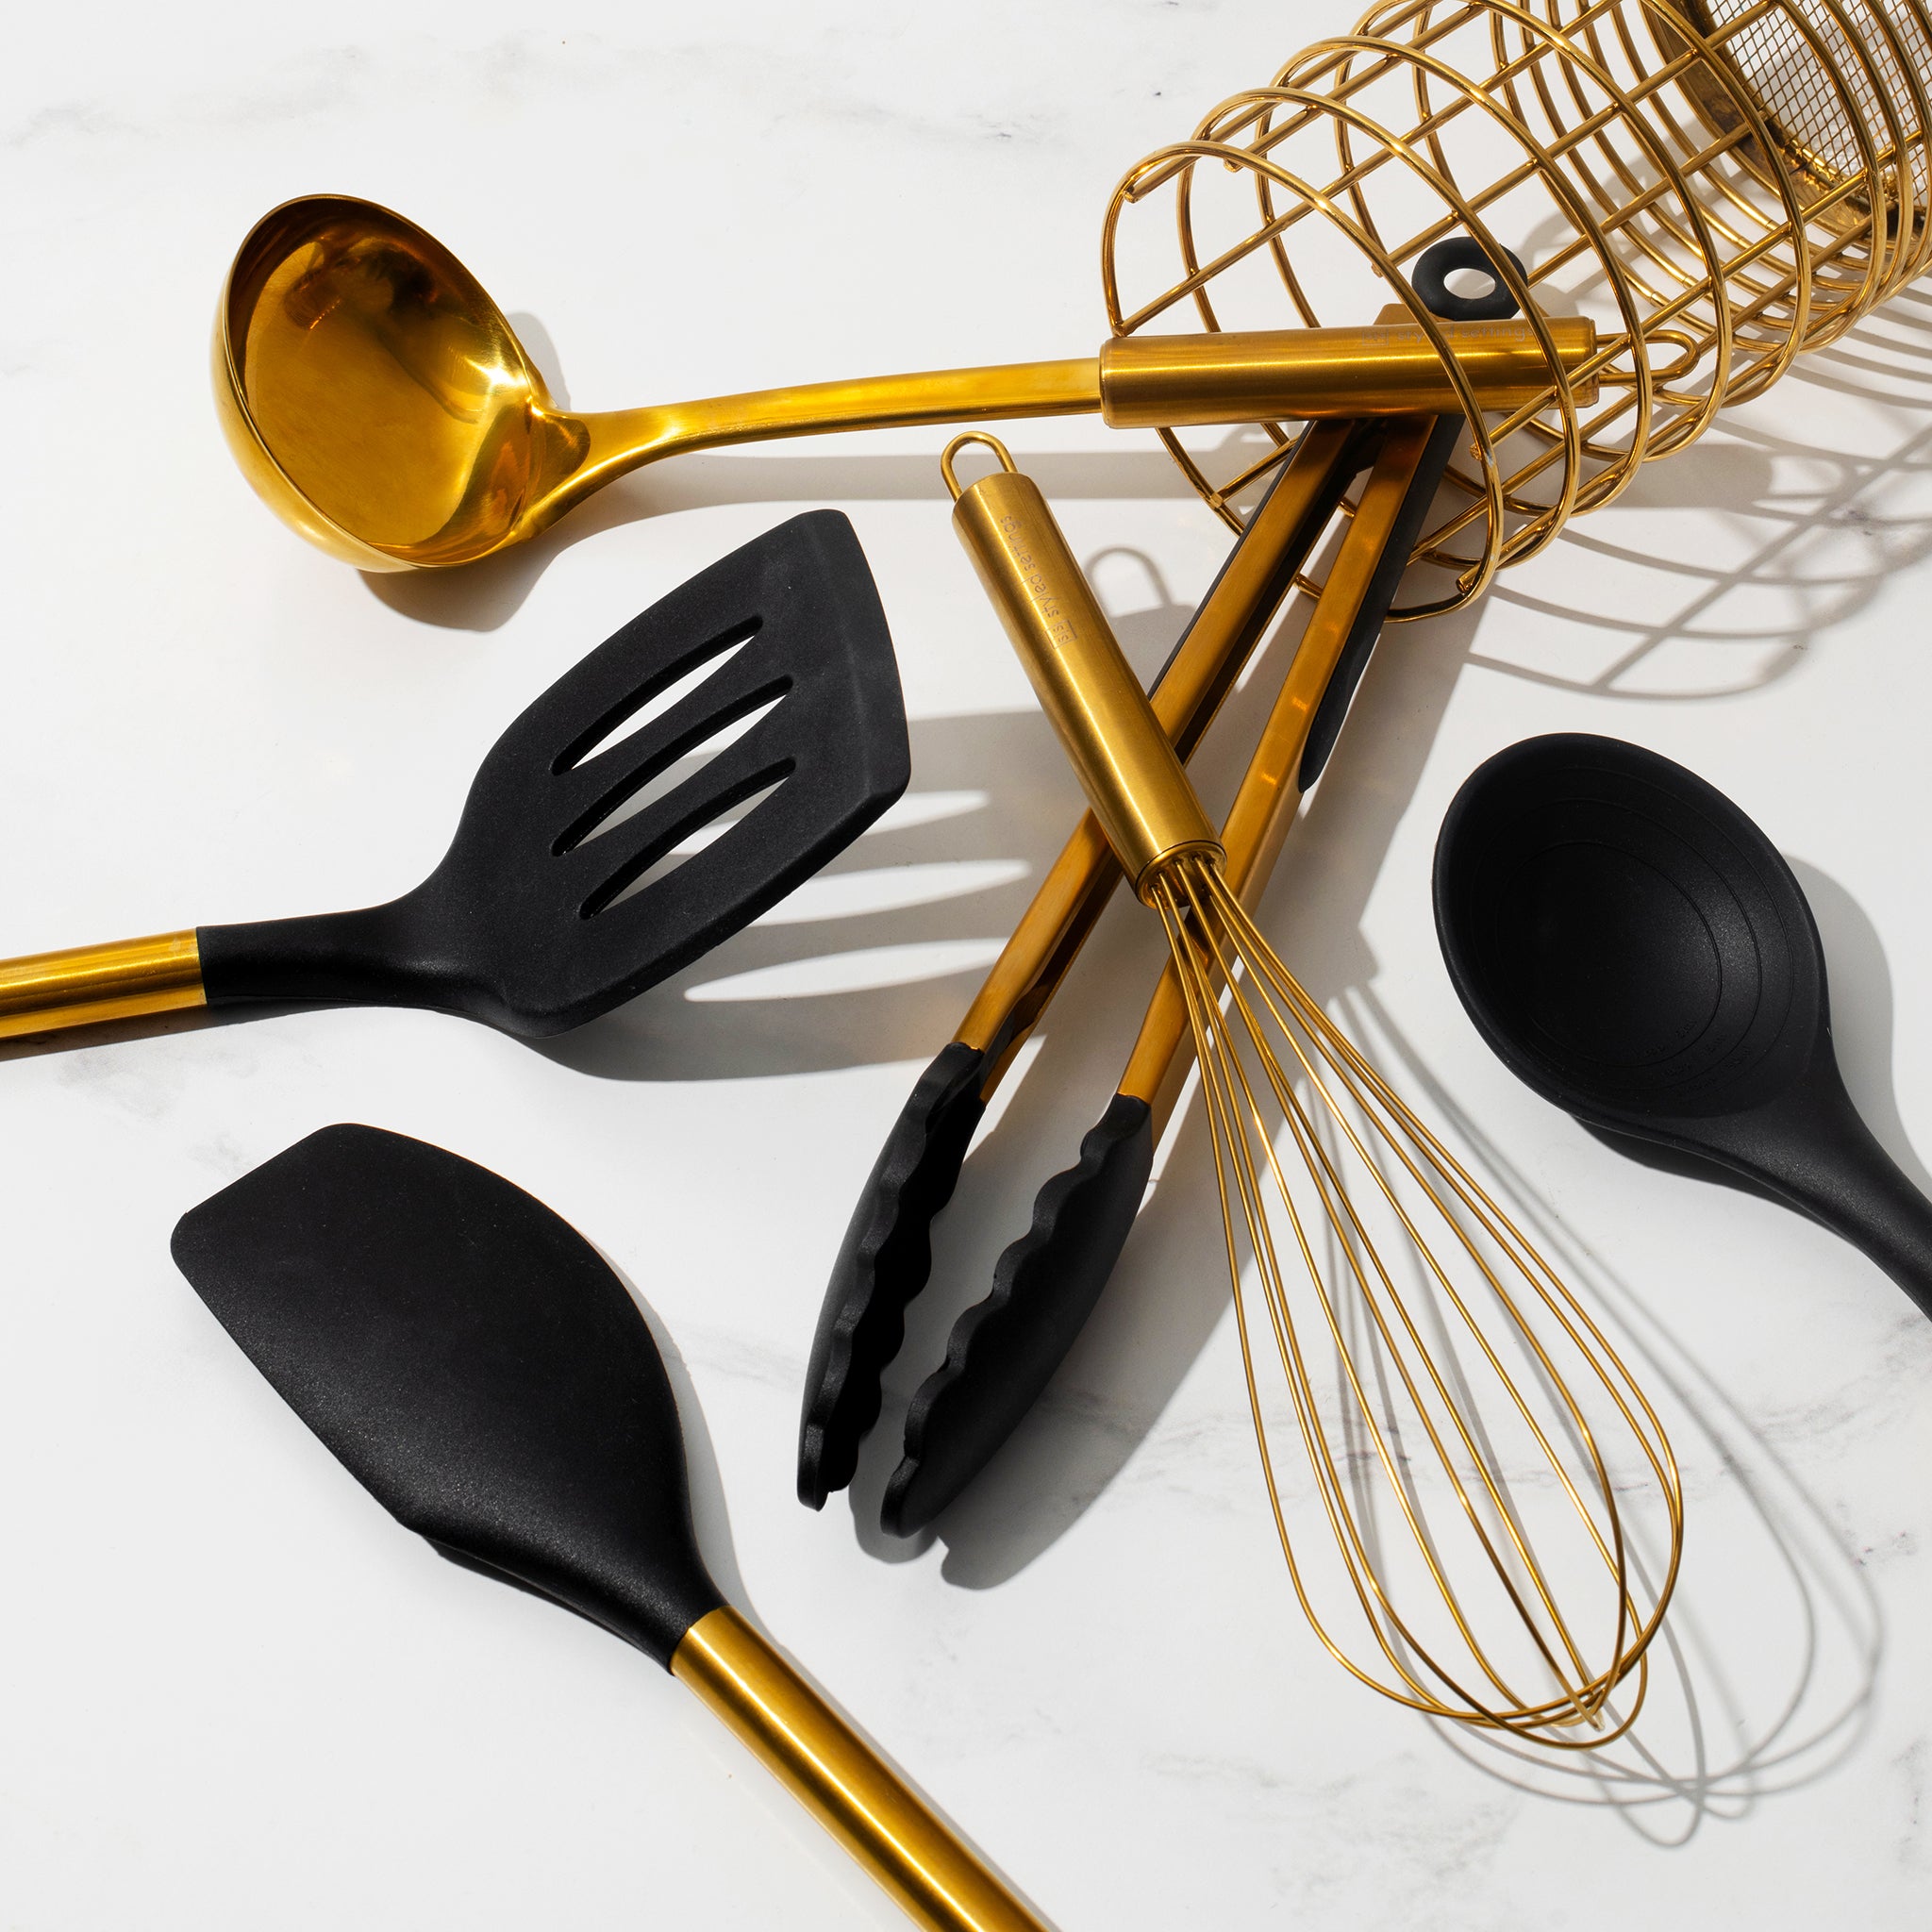 Black and Gold Kitchen Utensils Set with Holder